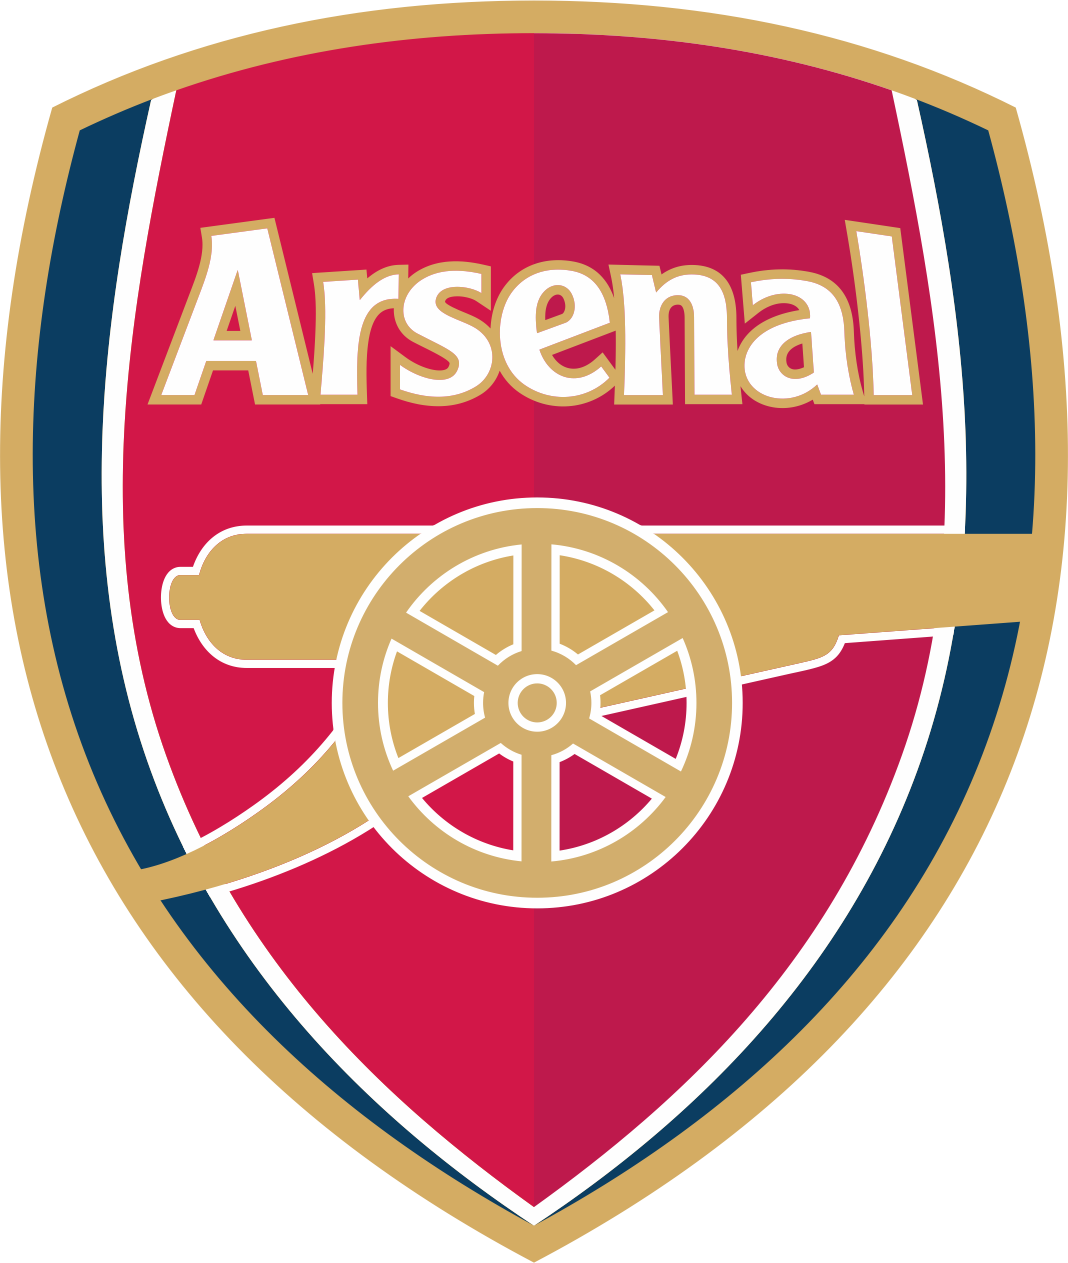 Arsenal Fc Logo Clipart - Arsenal Fc Vector, Transparent background PNG HD thumbnail